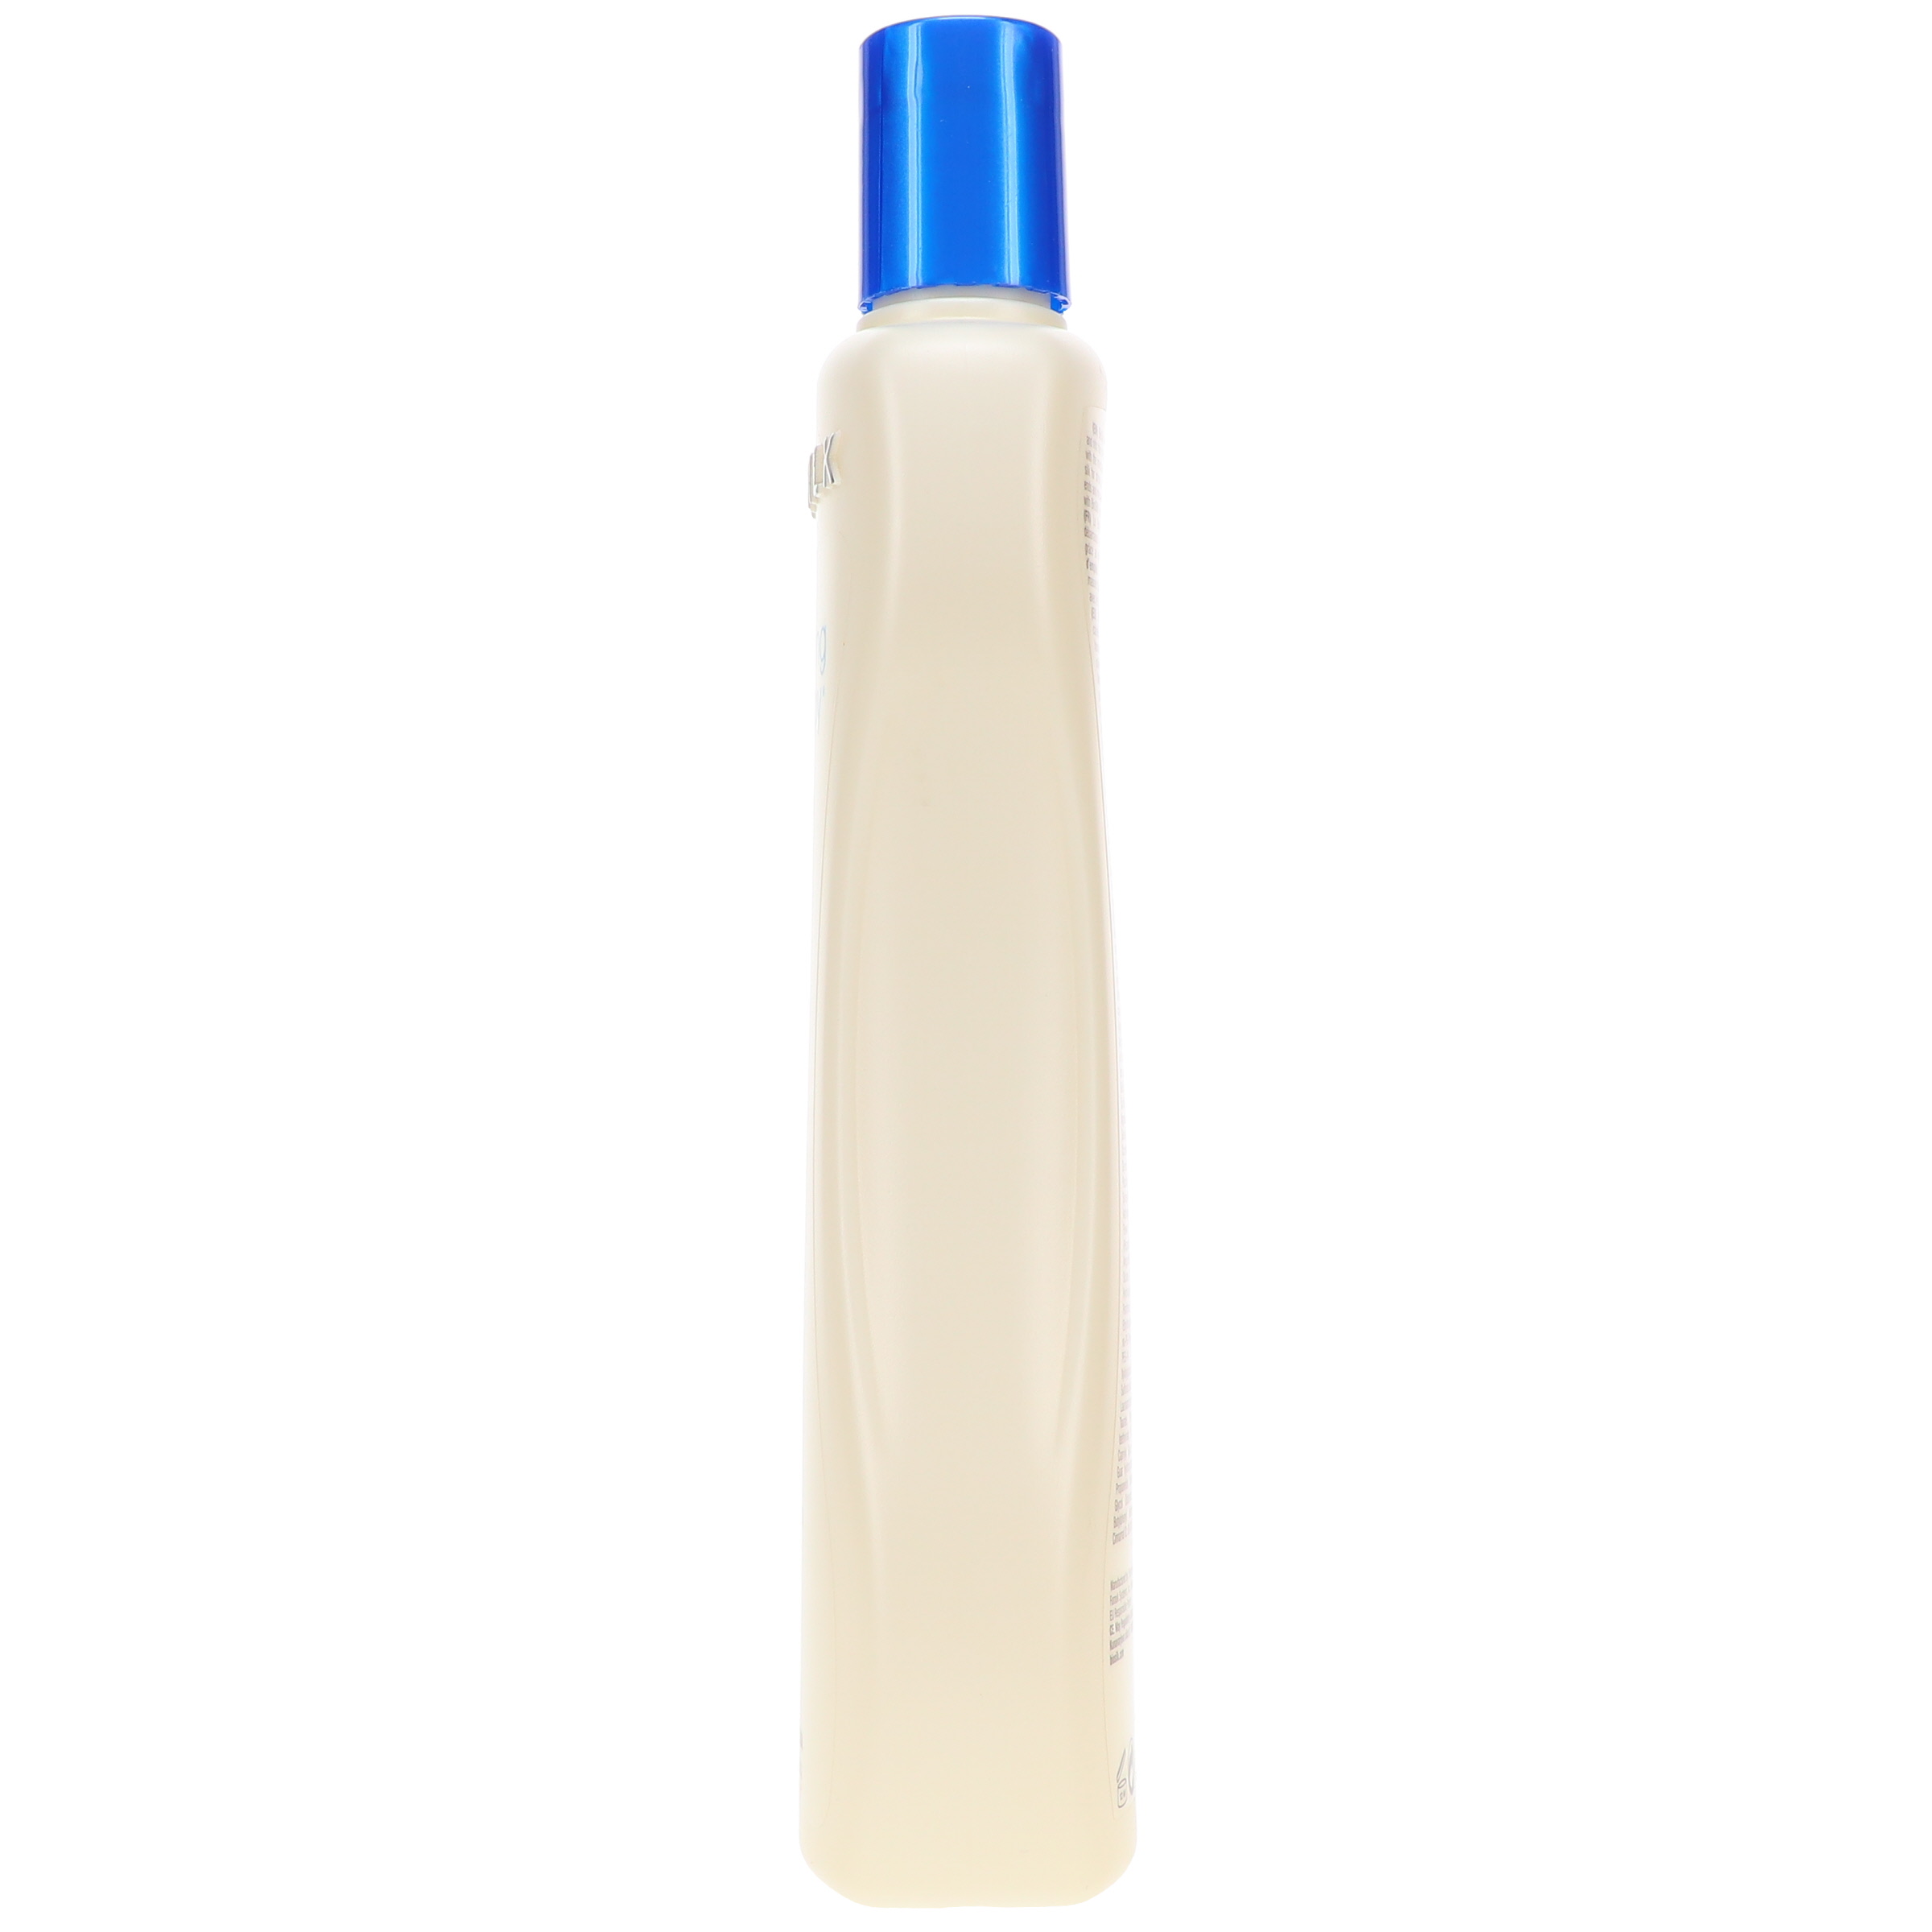 Biosilk Hydrating Therapy Shampoo 12 oz - image 3 of 8